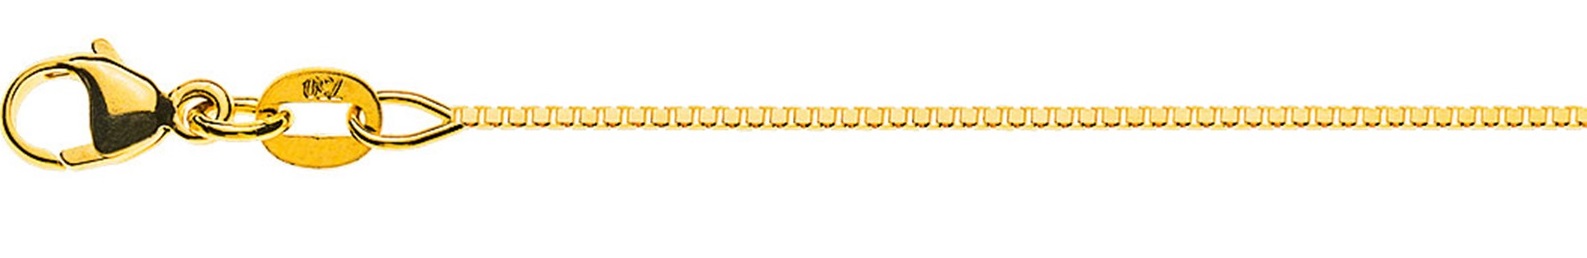 AURONOS Prestige Necklace yellow gold 18K Venetian chain diamond 42cm 0.8mm